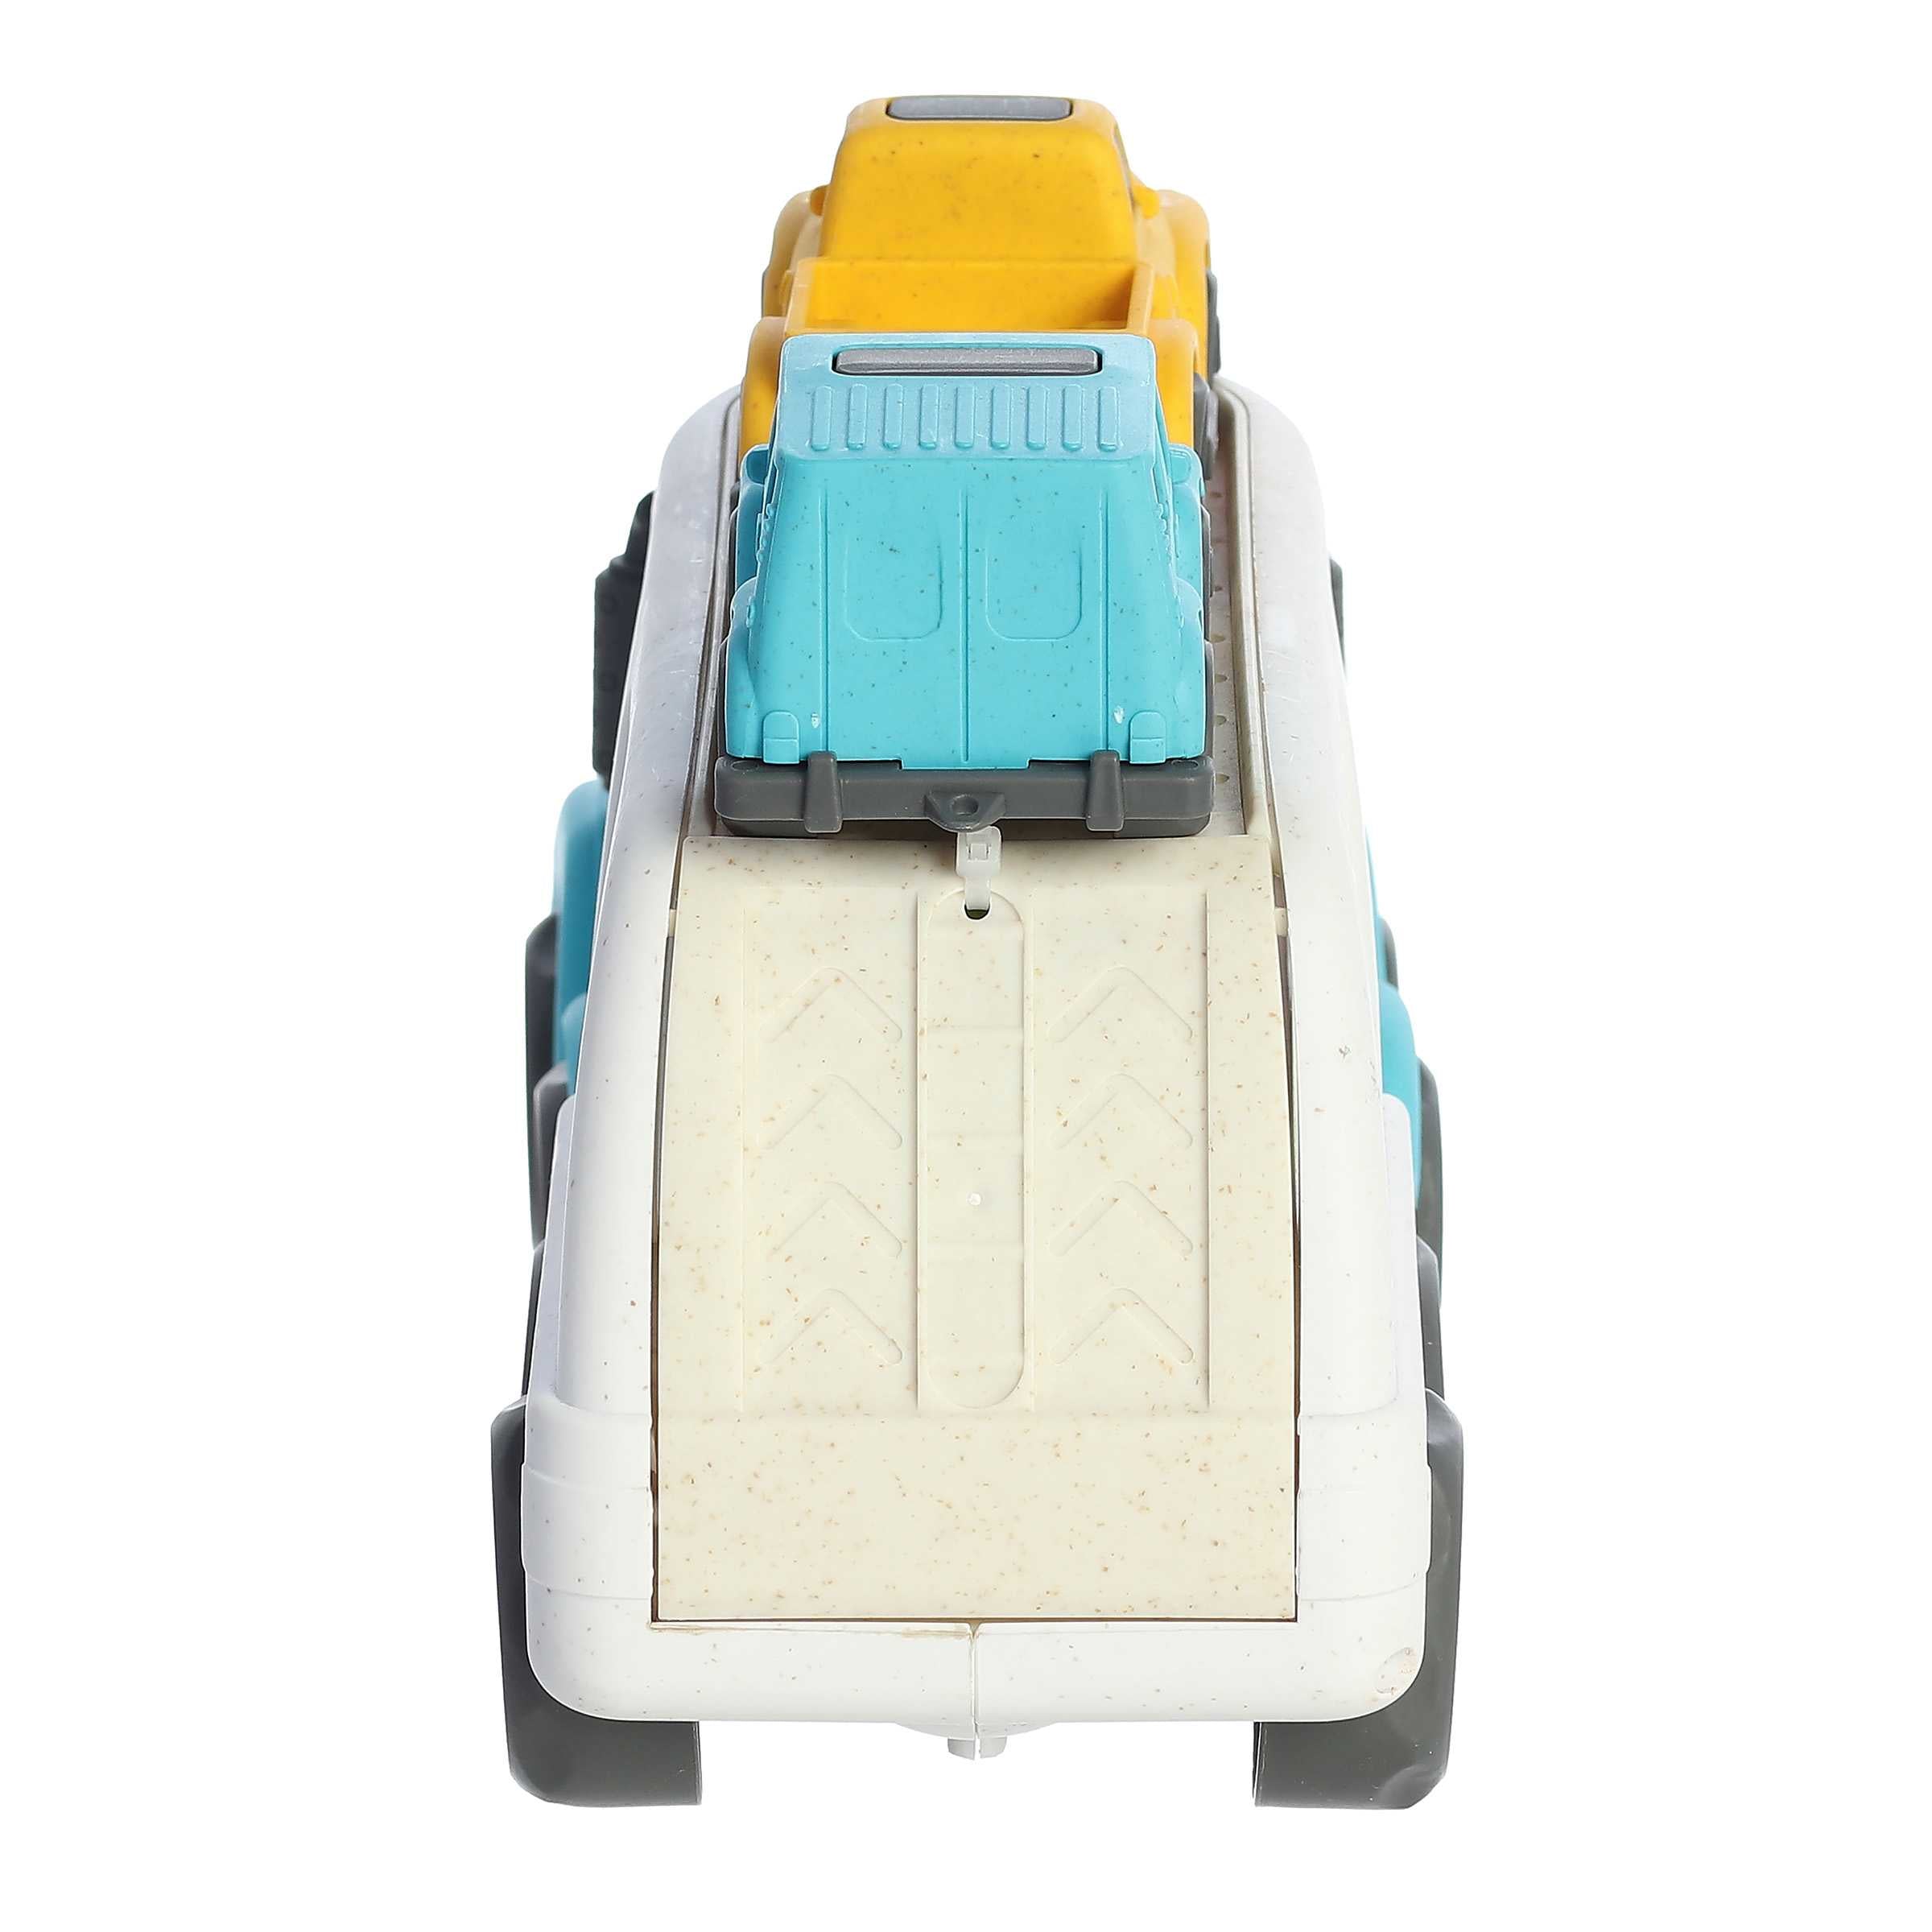 Aurora® Toys - Wheatley™ - Car Hauler